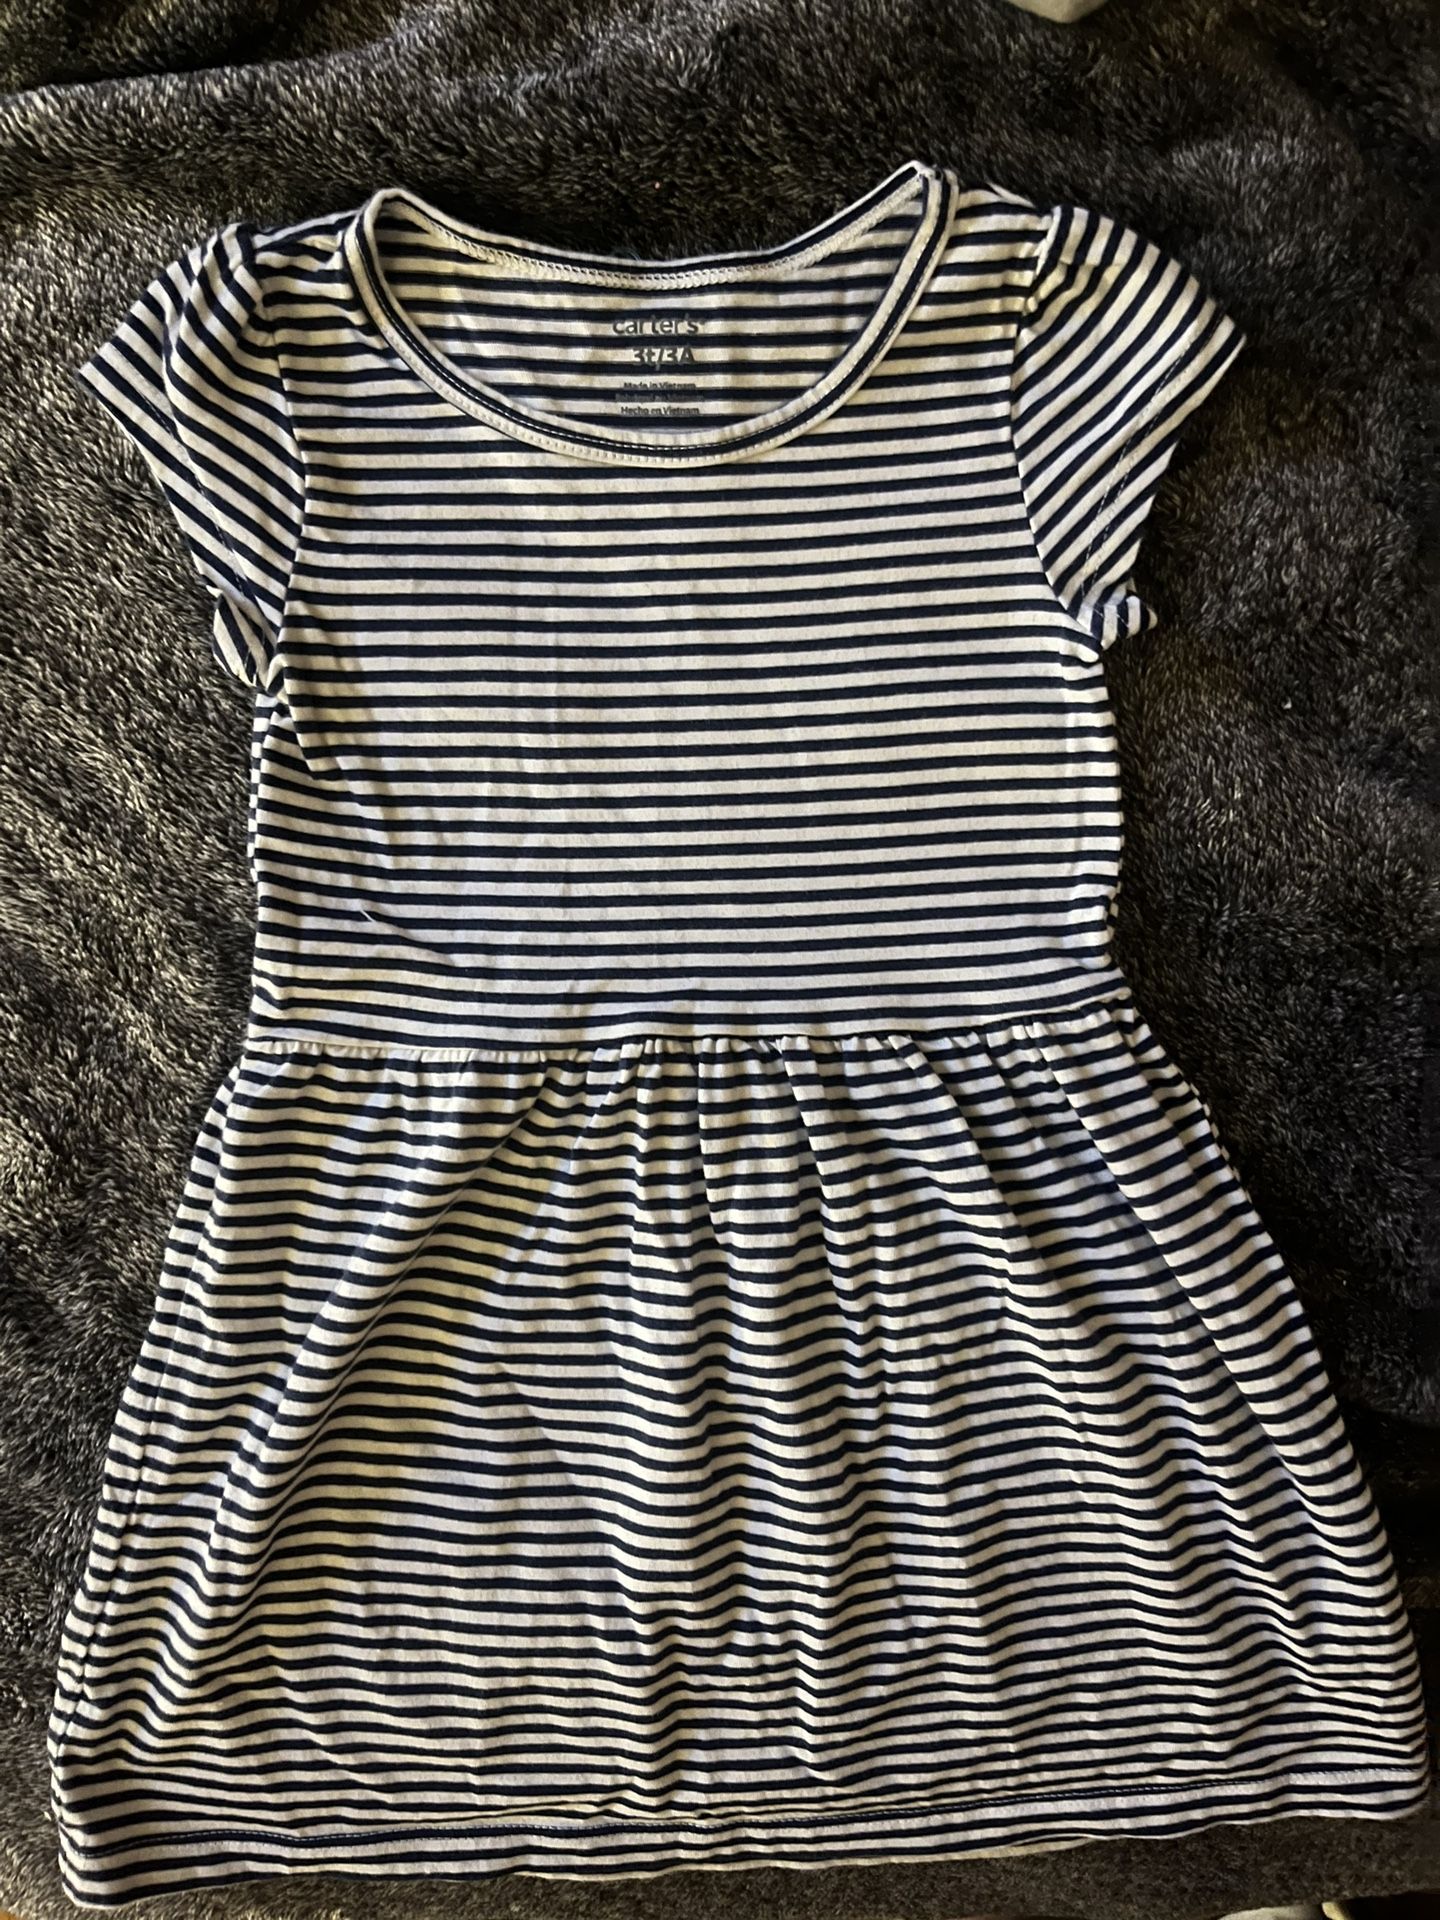 3T Striped Dress-Carters 